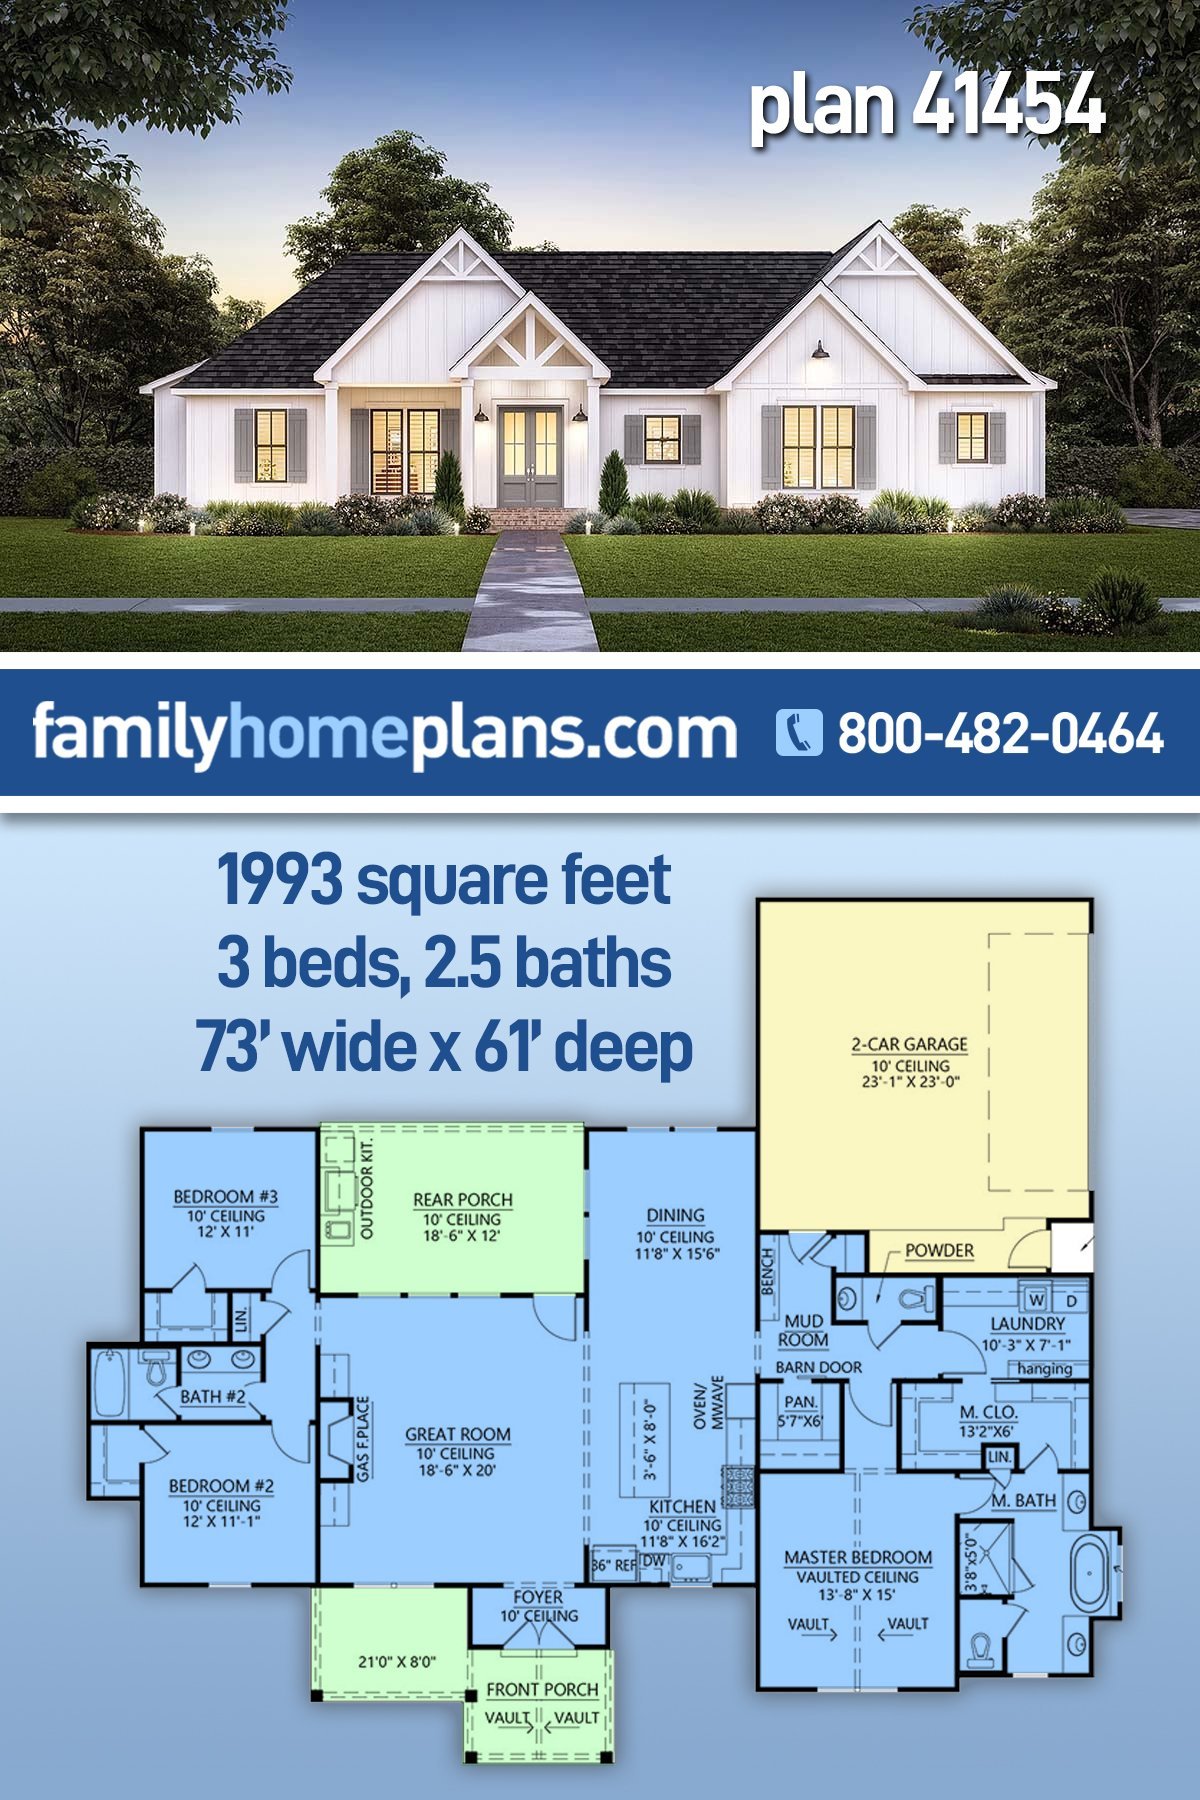 House Plan 41454